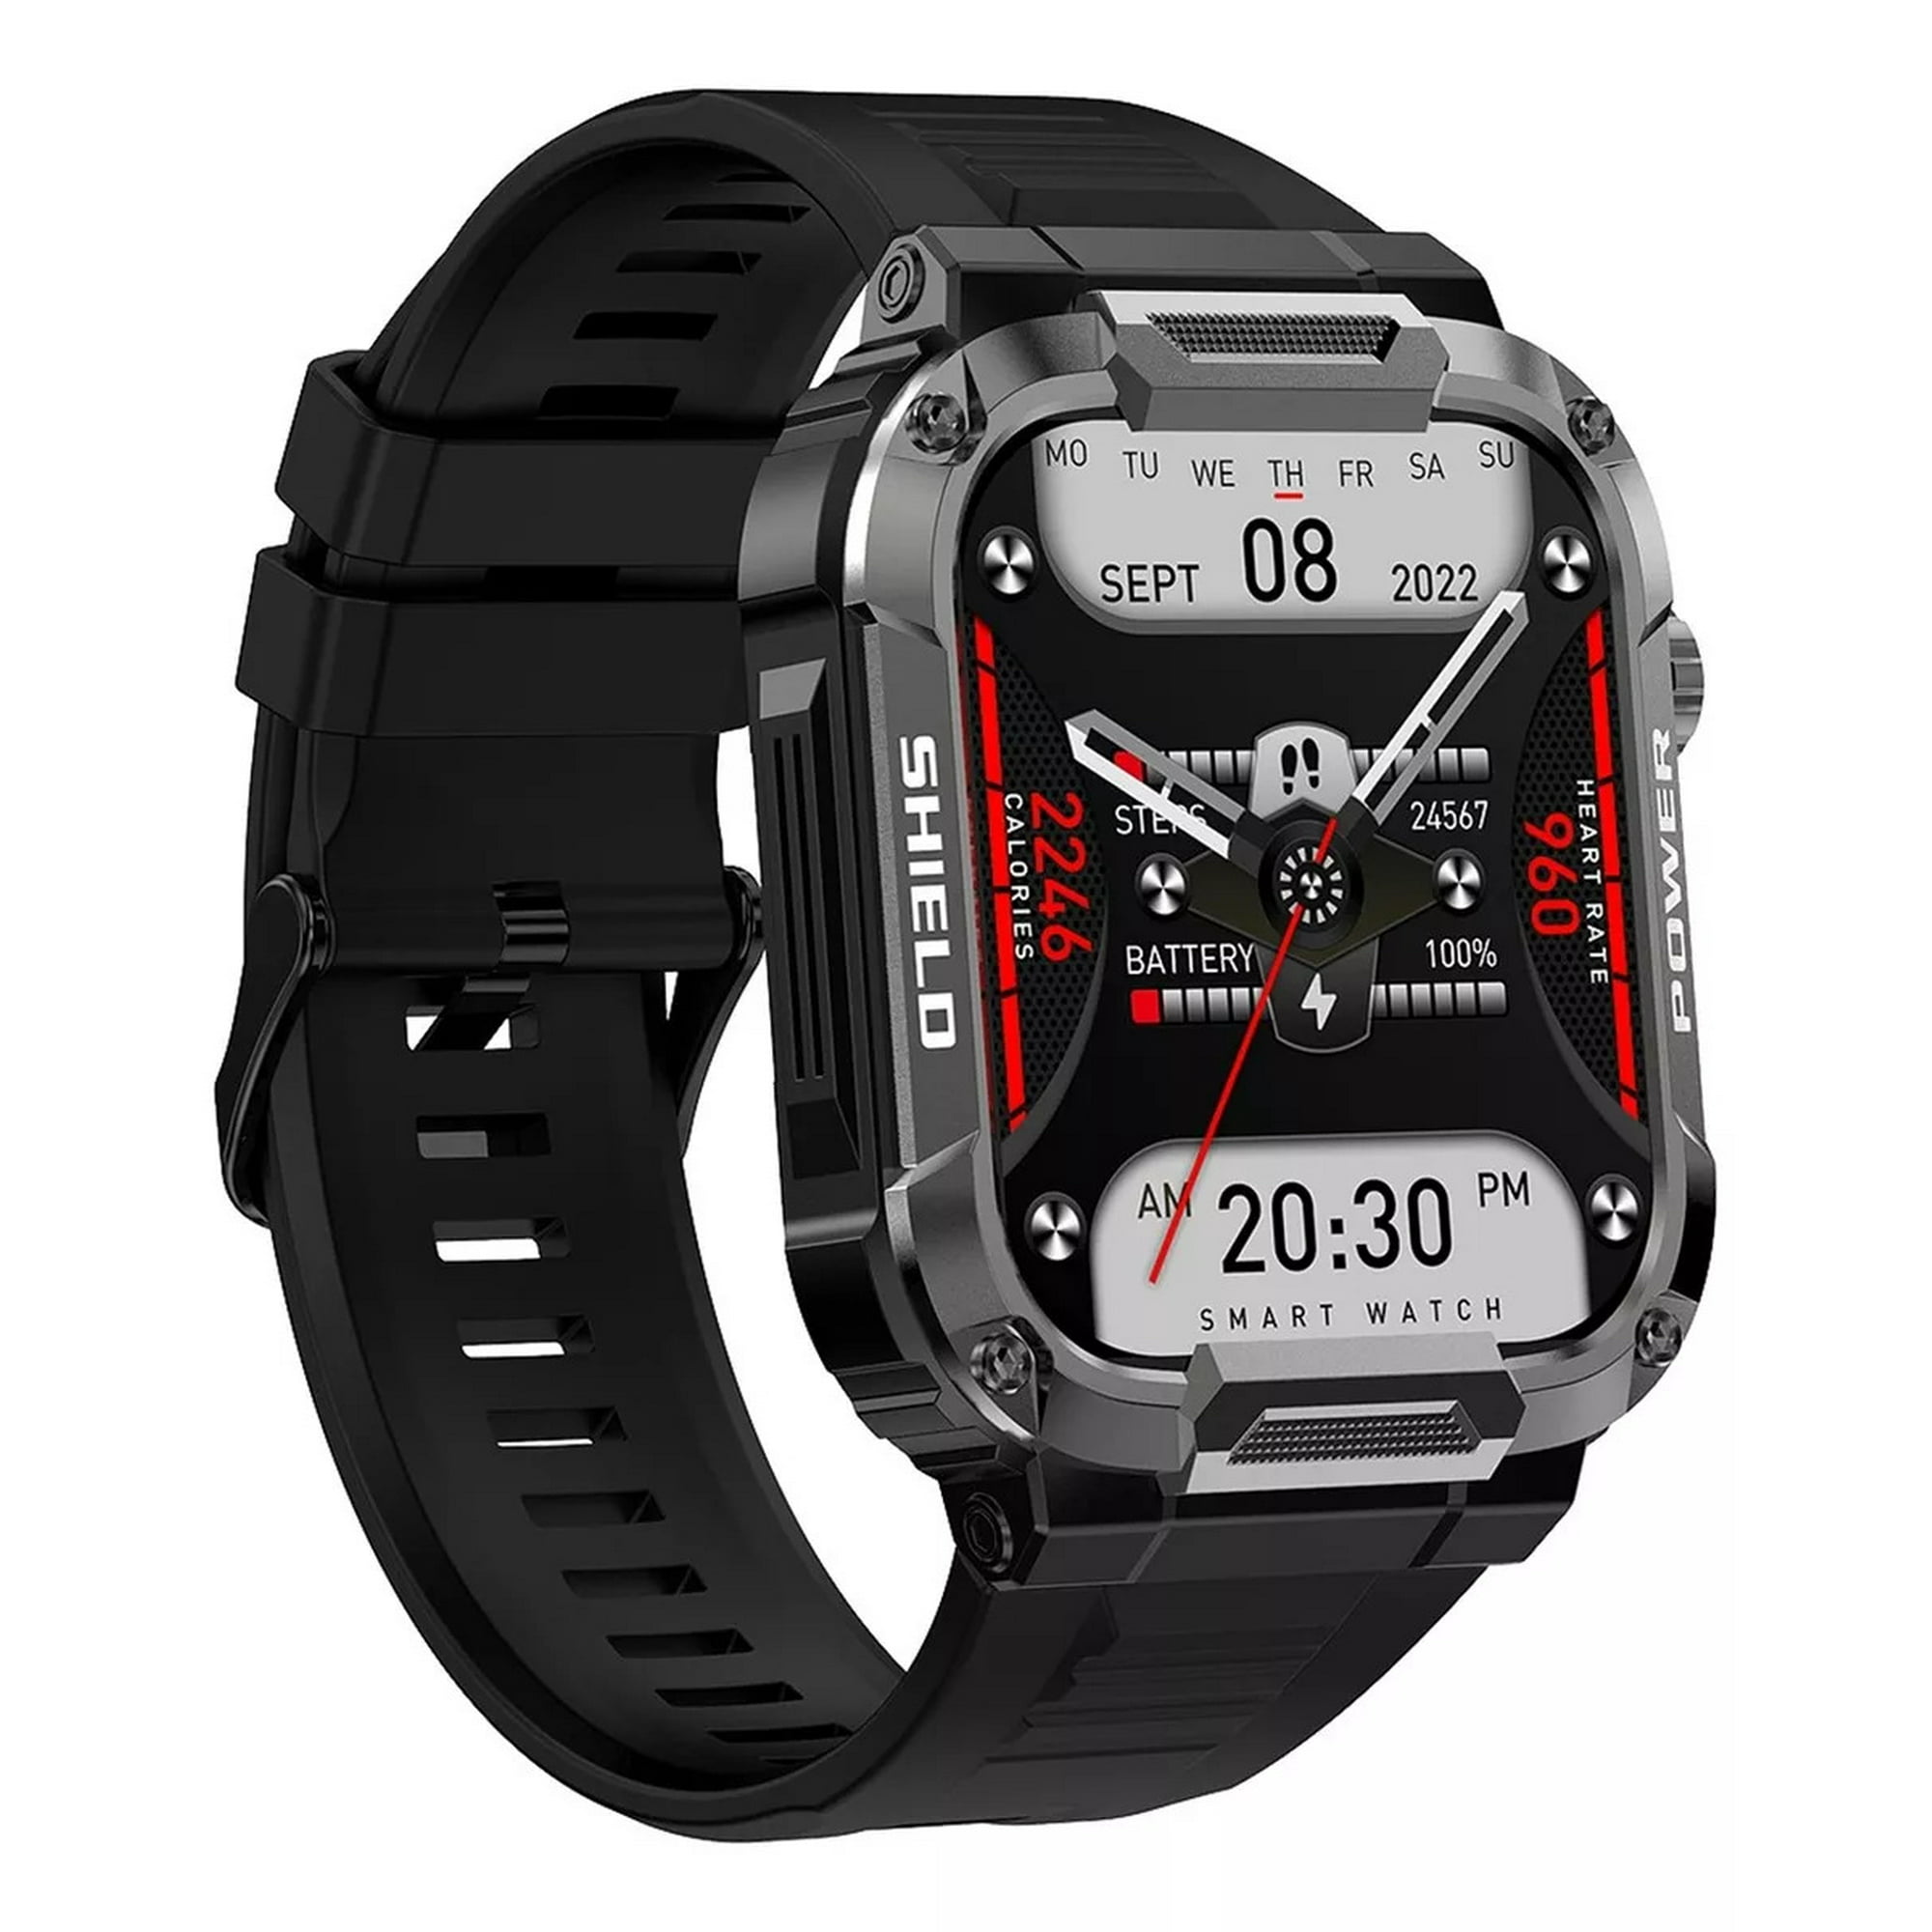 Reloj Inteligente Smartwatch Y16 Smart Band Android Febo - FEBO